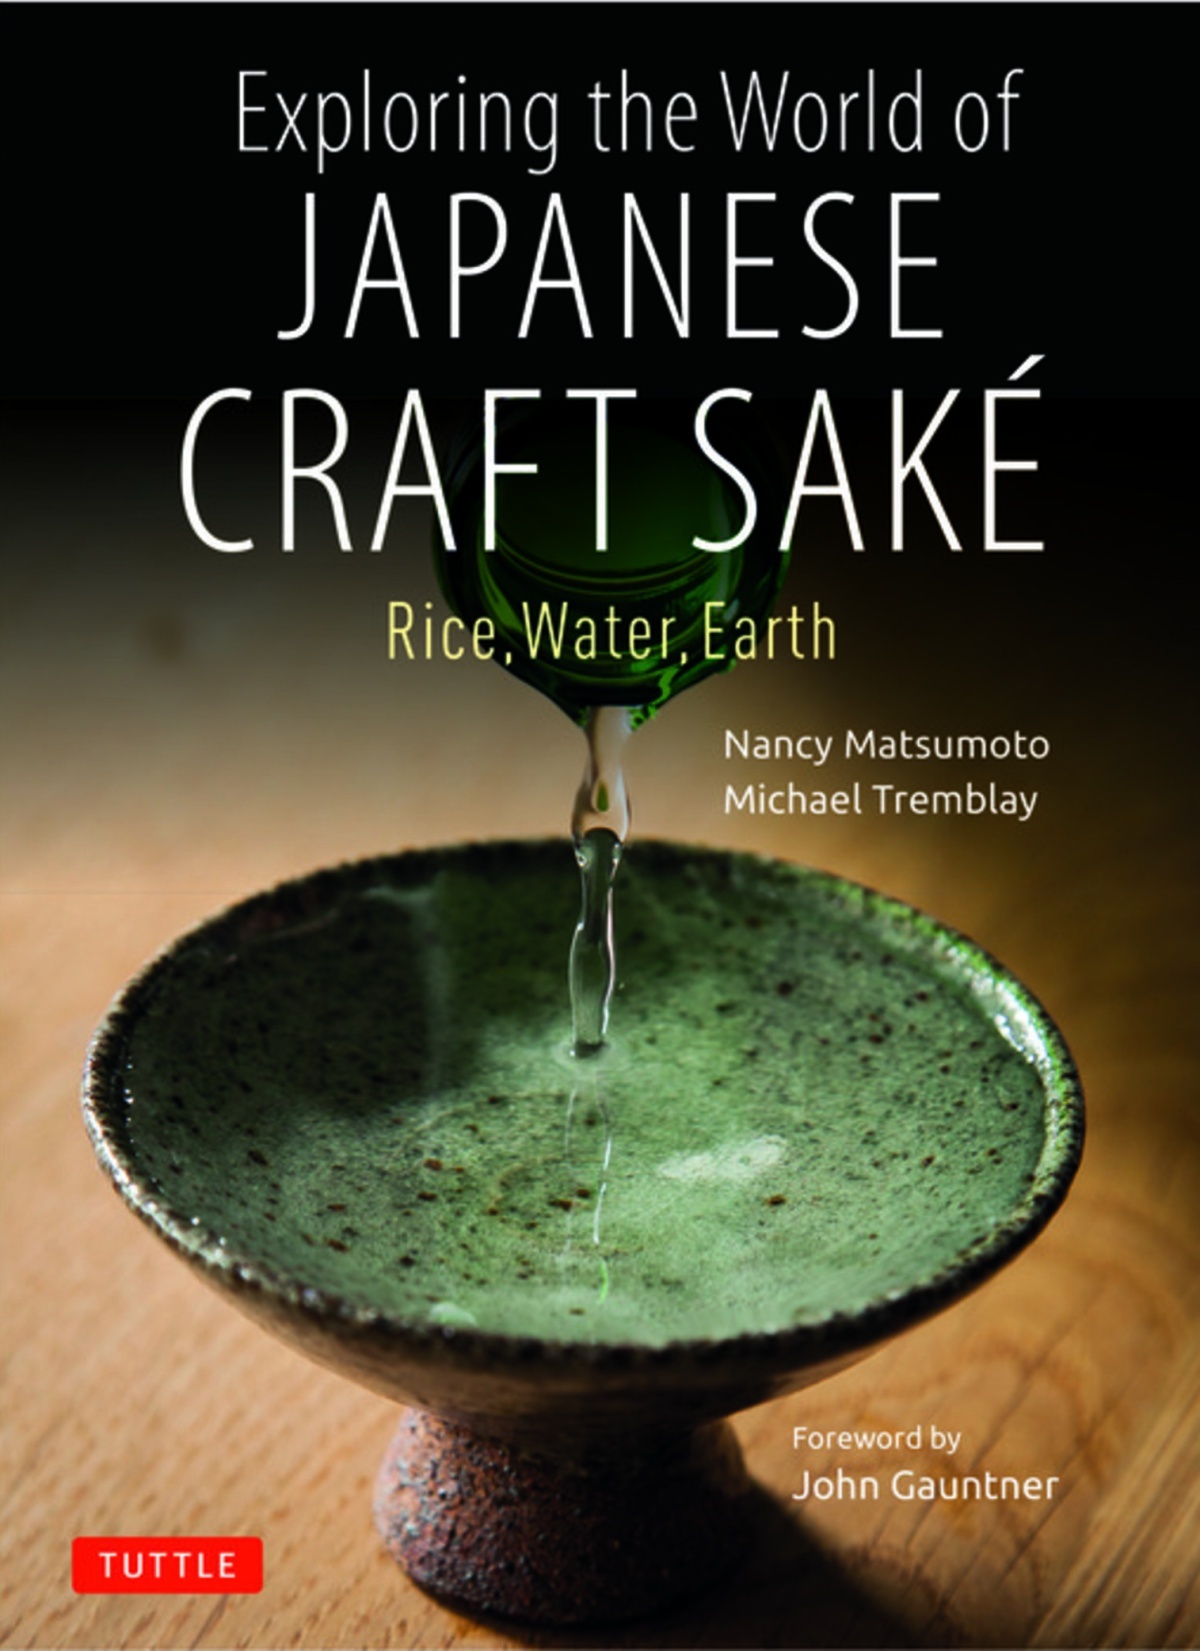 "Exploring the World of Japanese Craft Saké," by Nancy Matsumoto and Michael Tremblay